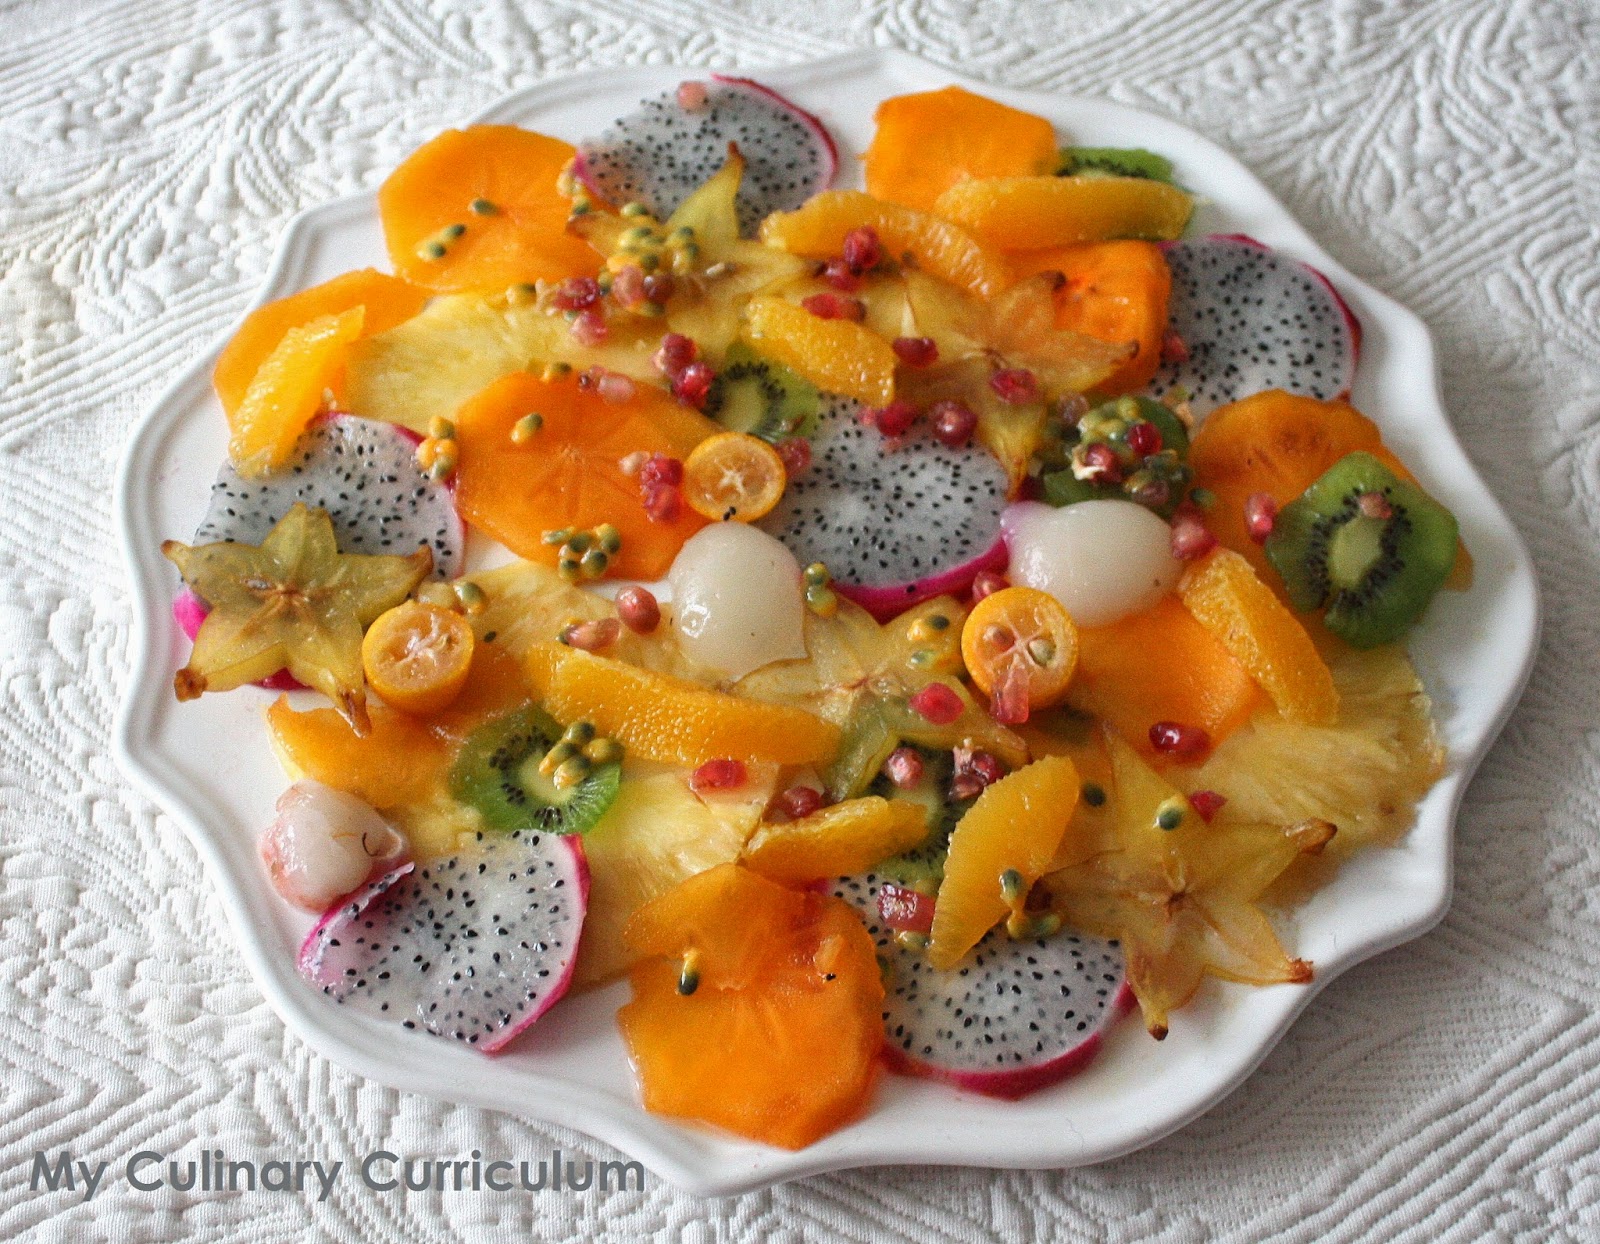 My Culinary Curriculum: Salade de fruits exotiques au sucre pétillant et au  Cointreau (Salad of exotic fruits with sparkling sugar and Cointreau)